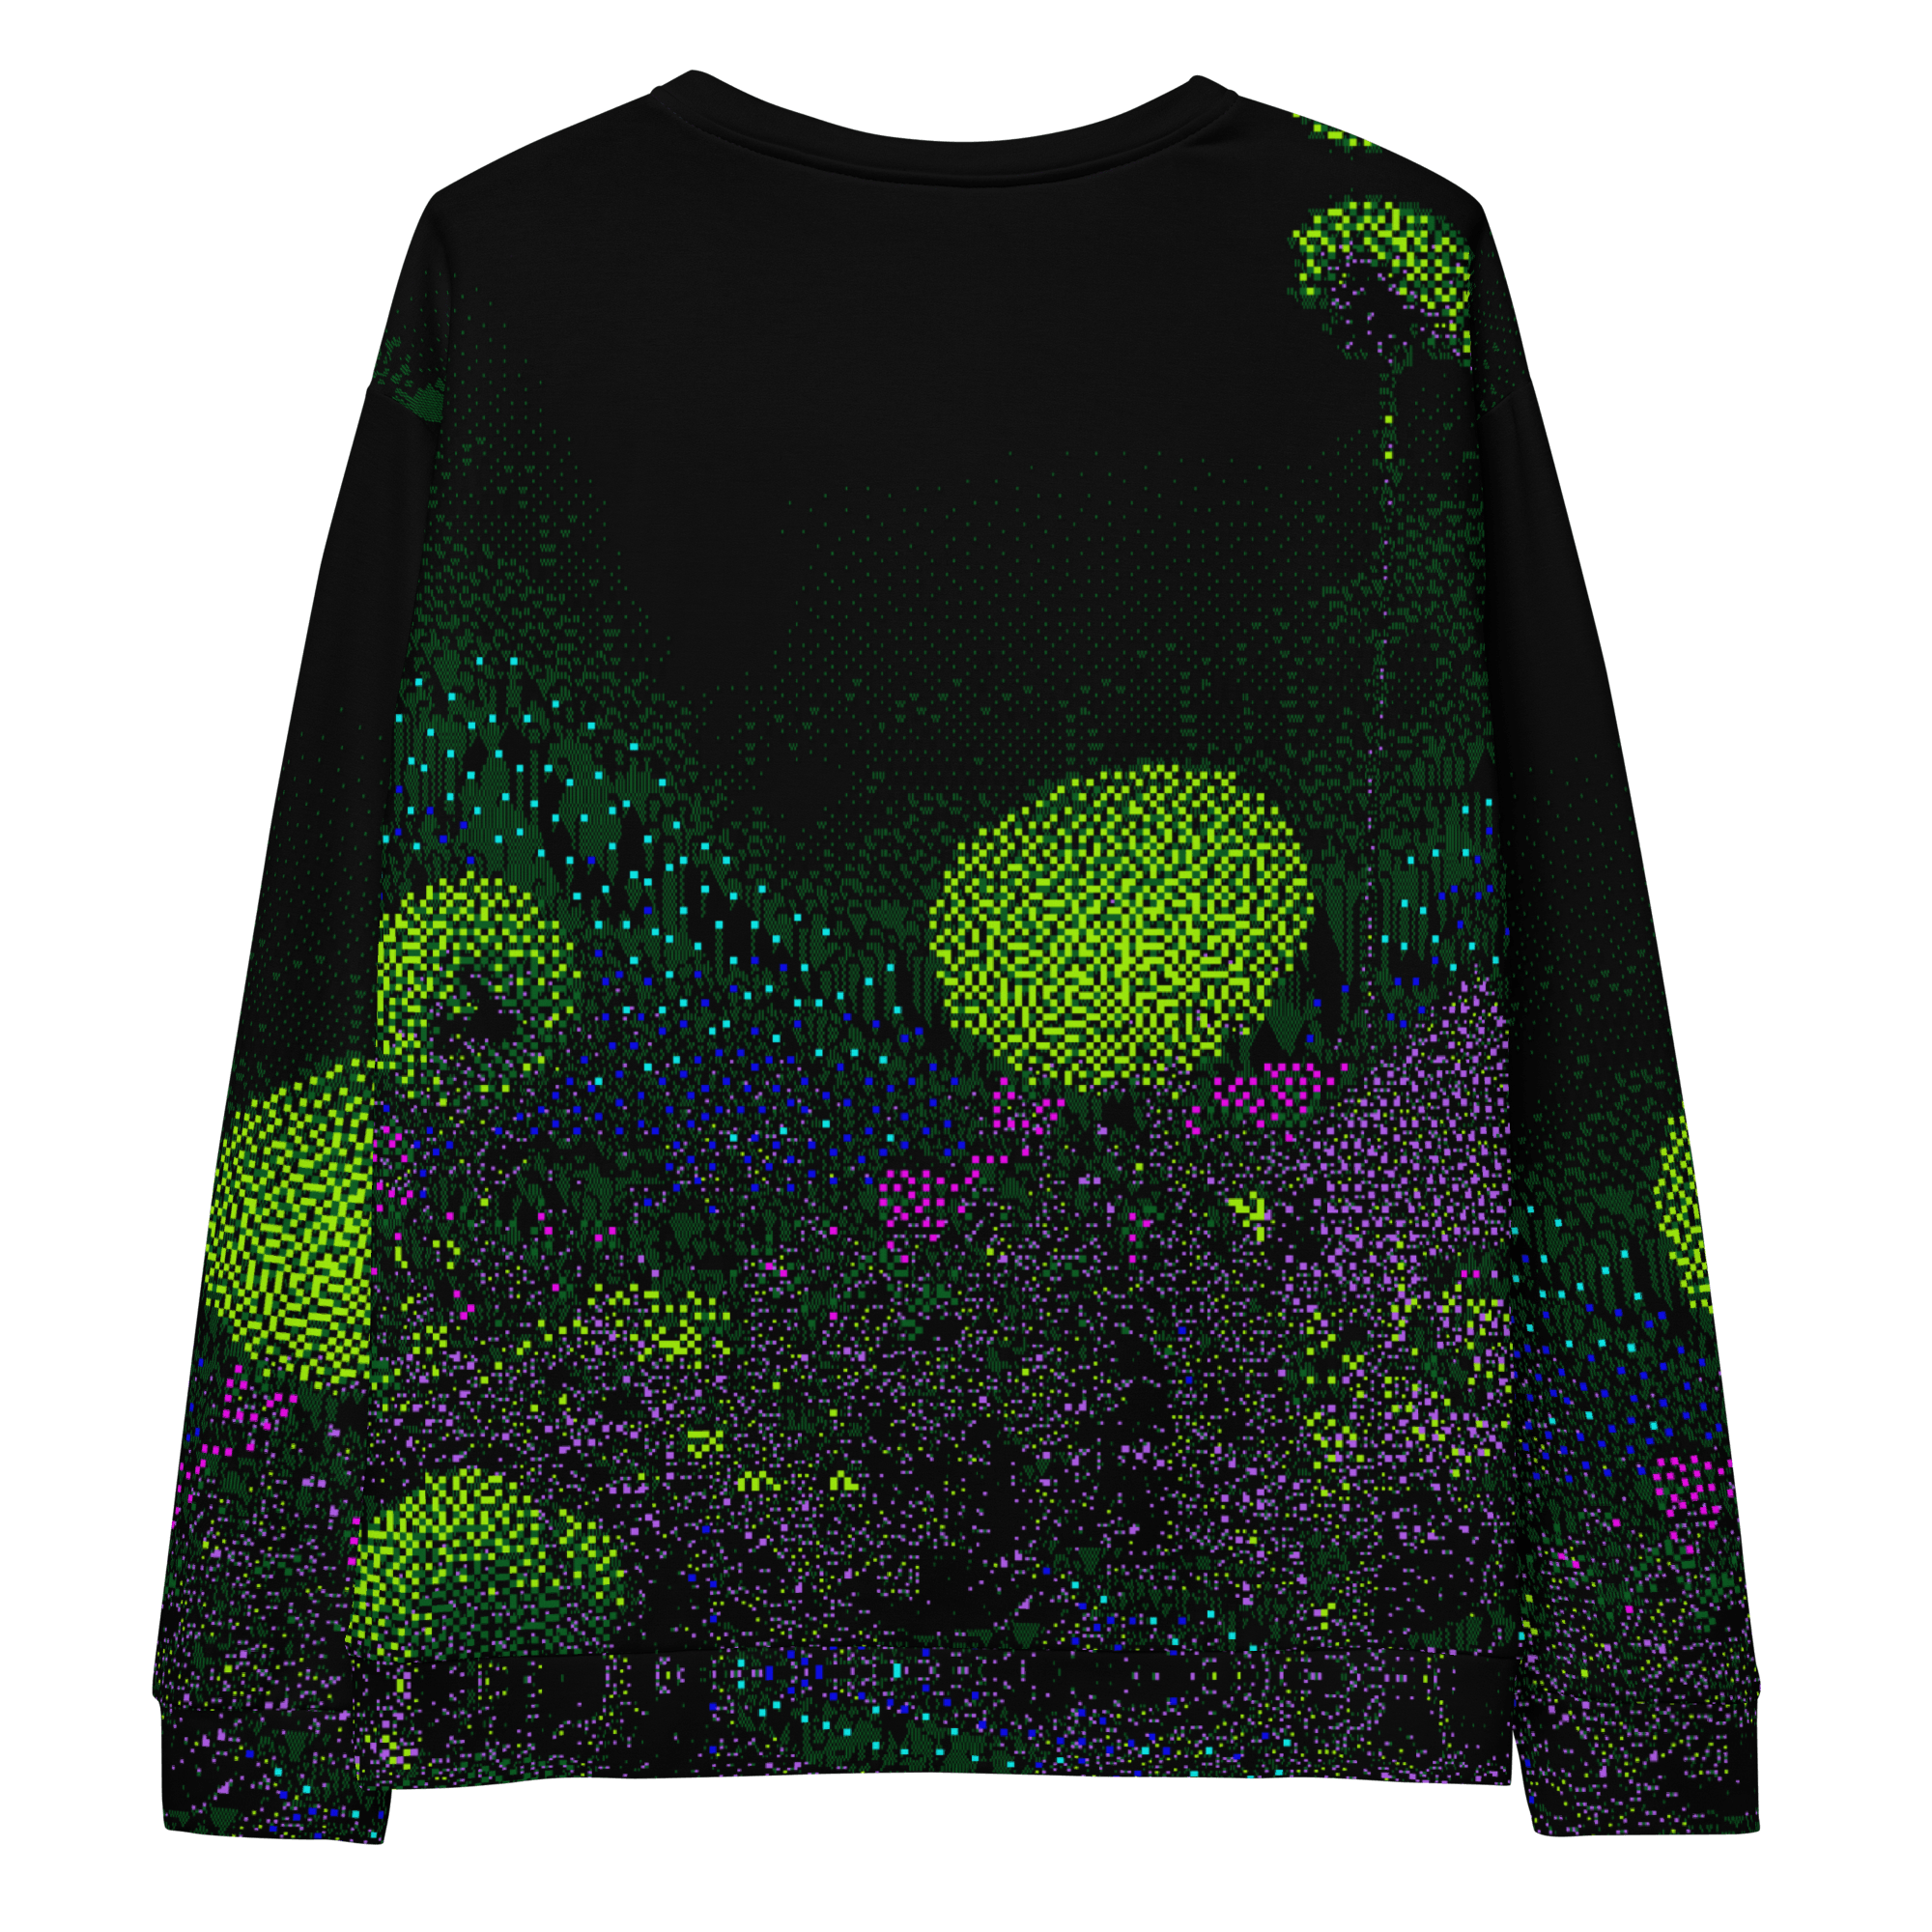 Nokturnal Magical Garden® Sweatshirt (7/7 pieces for sale) - Kikillo Club